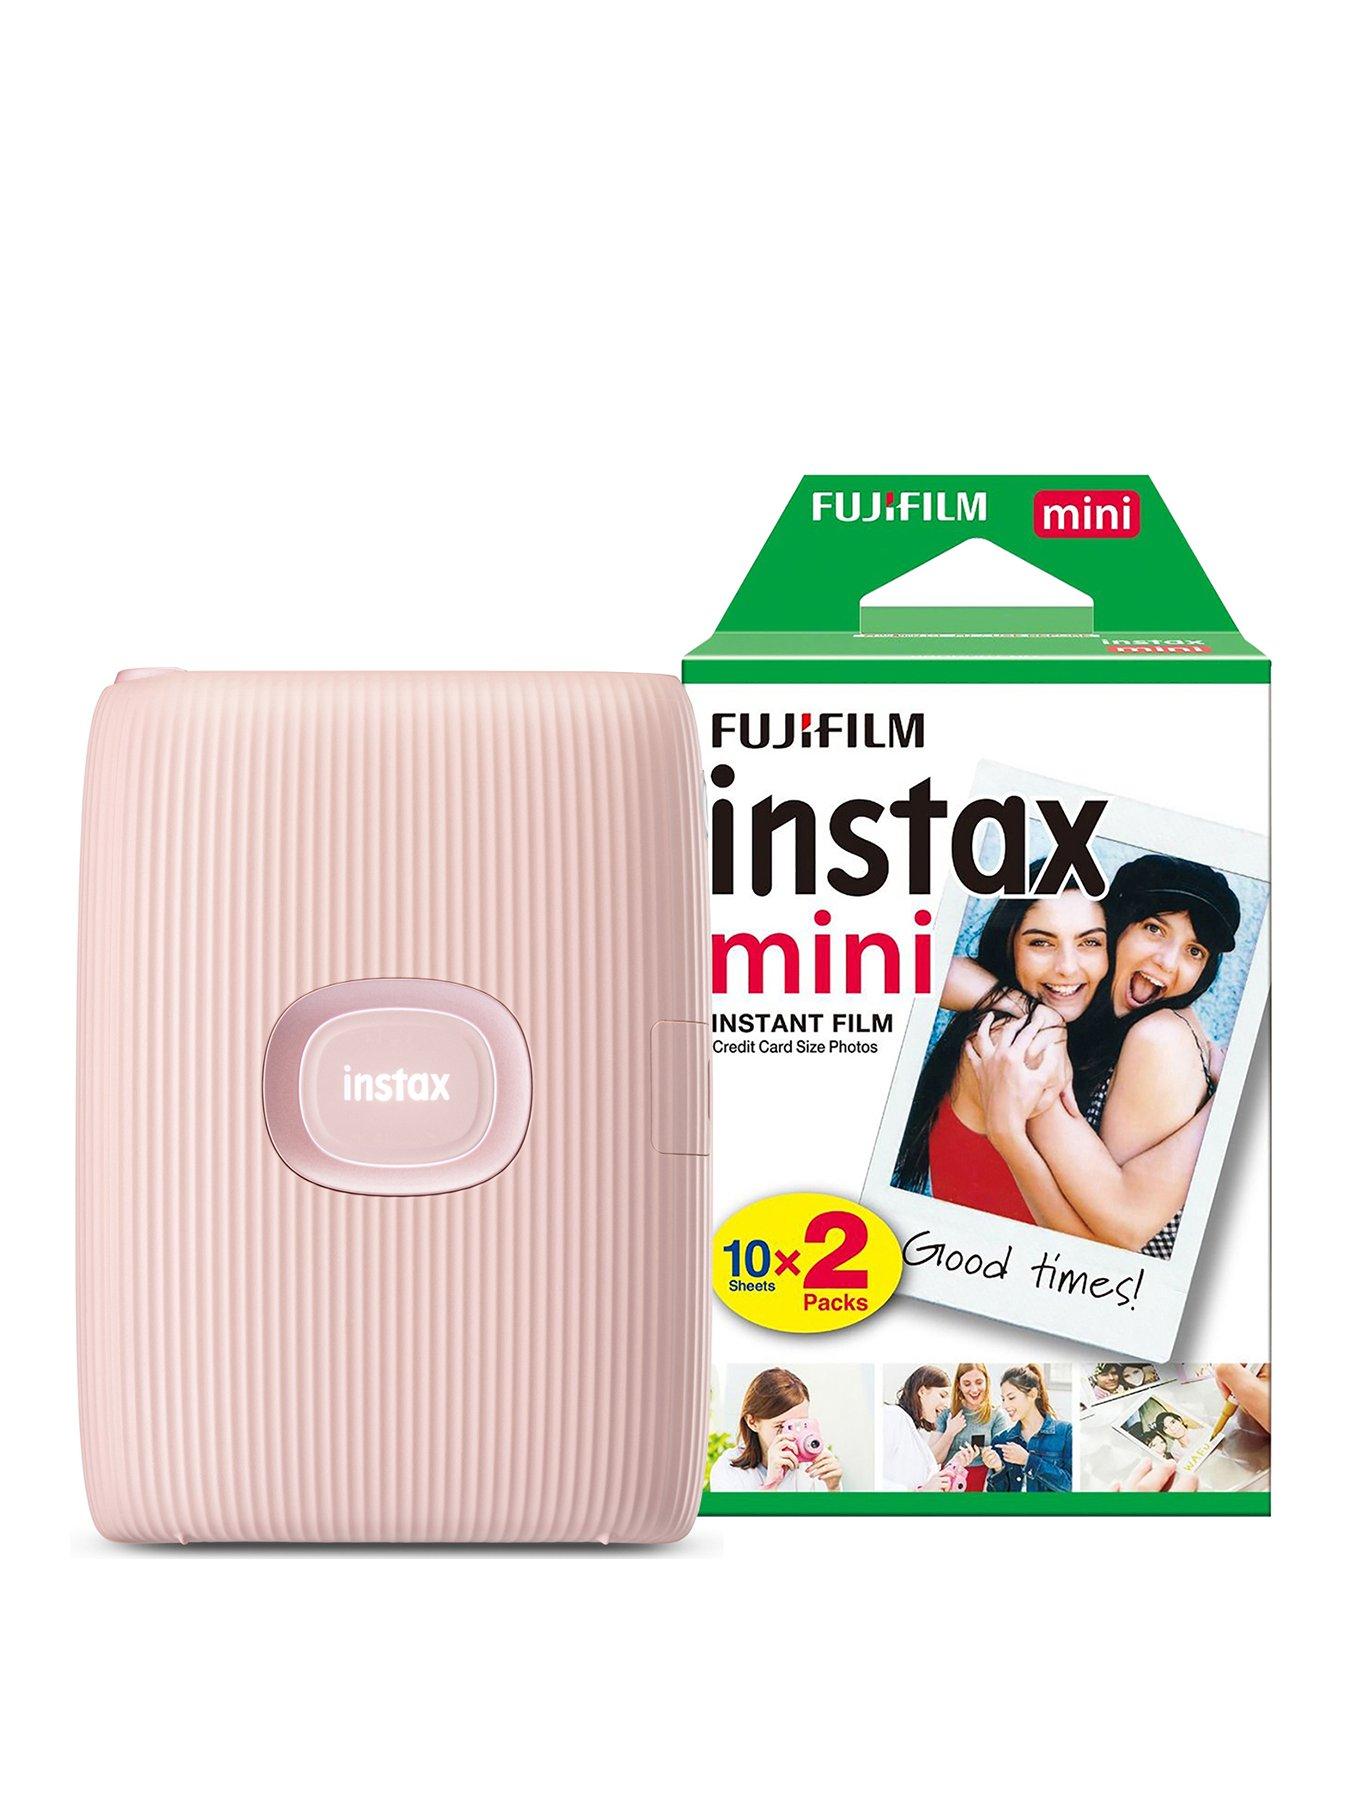 instax cameras - instant cameras and printers - INSTAX by Fujifilm (Ireland)